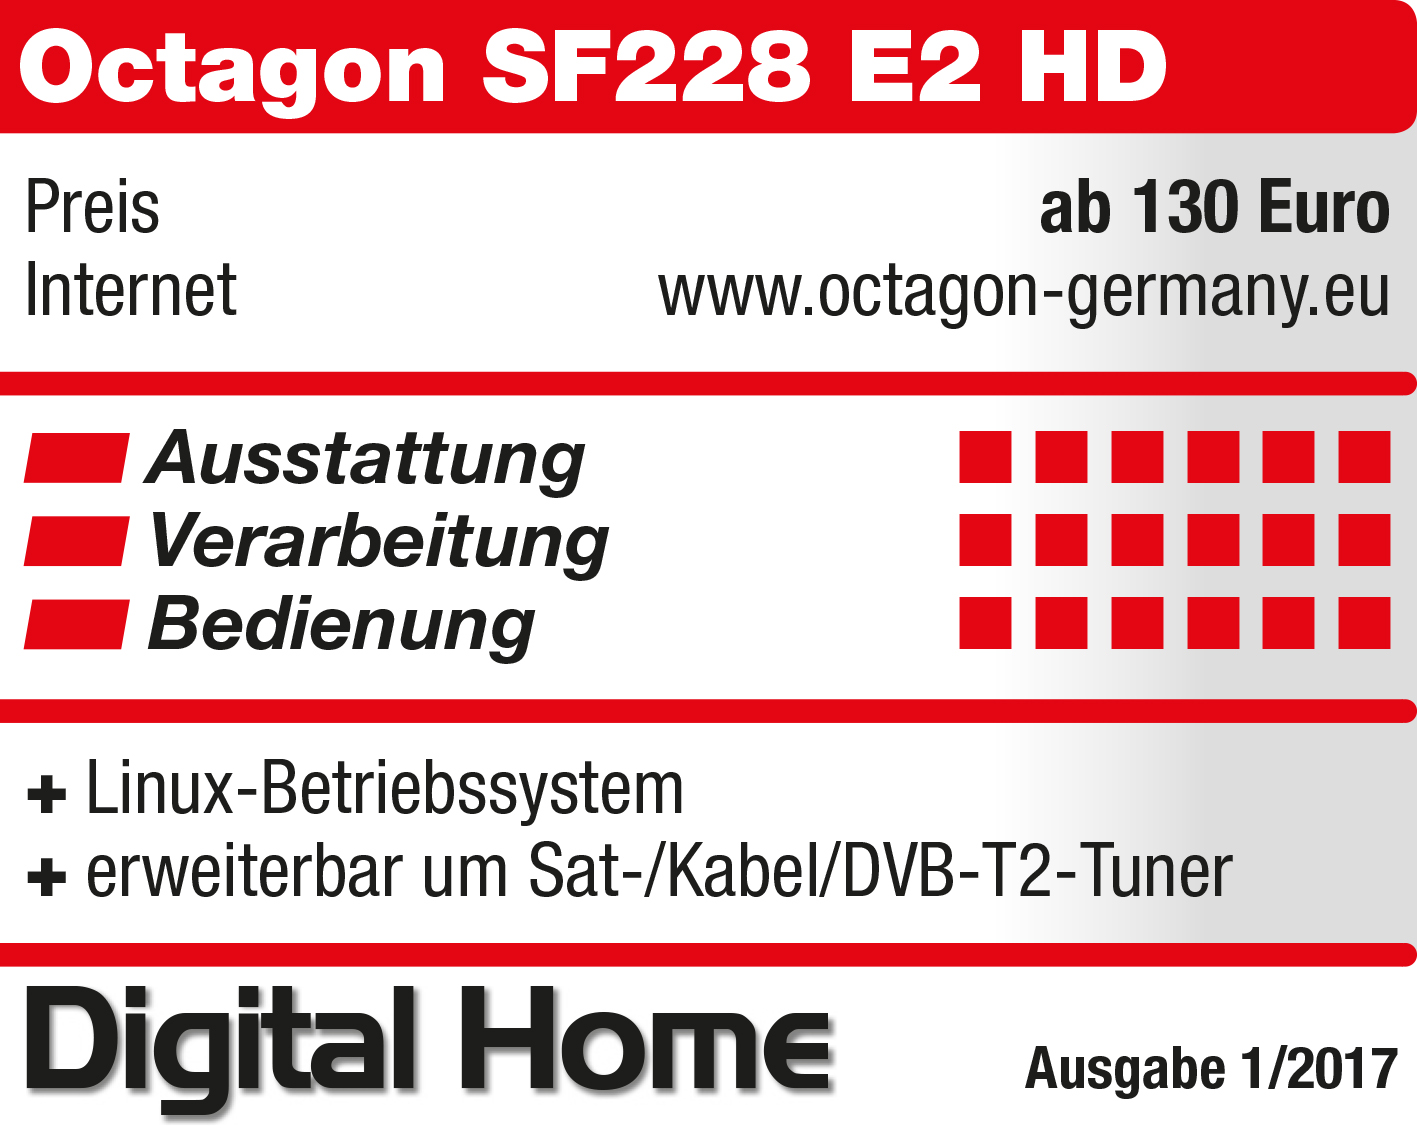 OctagonSF228E2HD-Digital-Home-1-2017